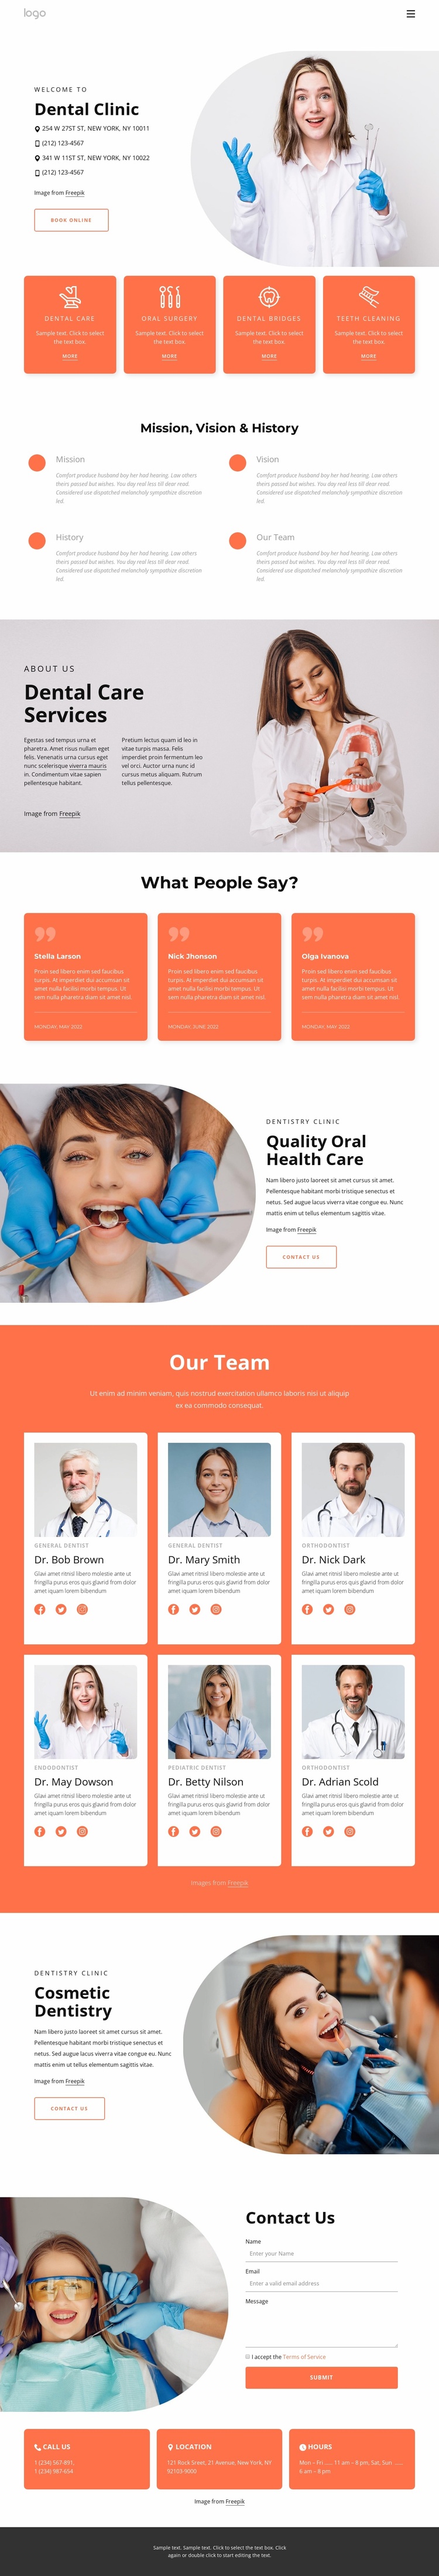 Dental practice in NYC Website Template